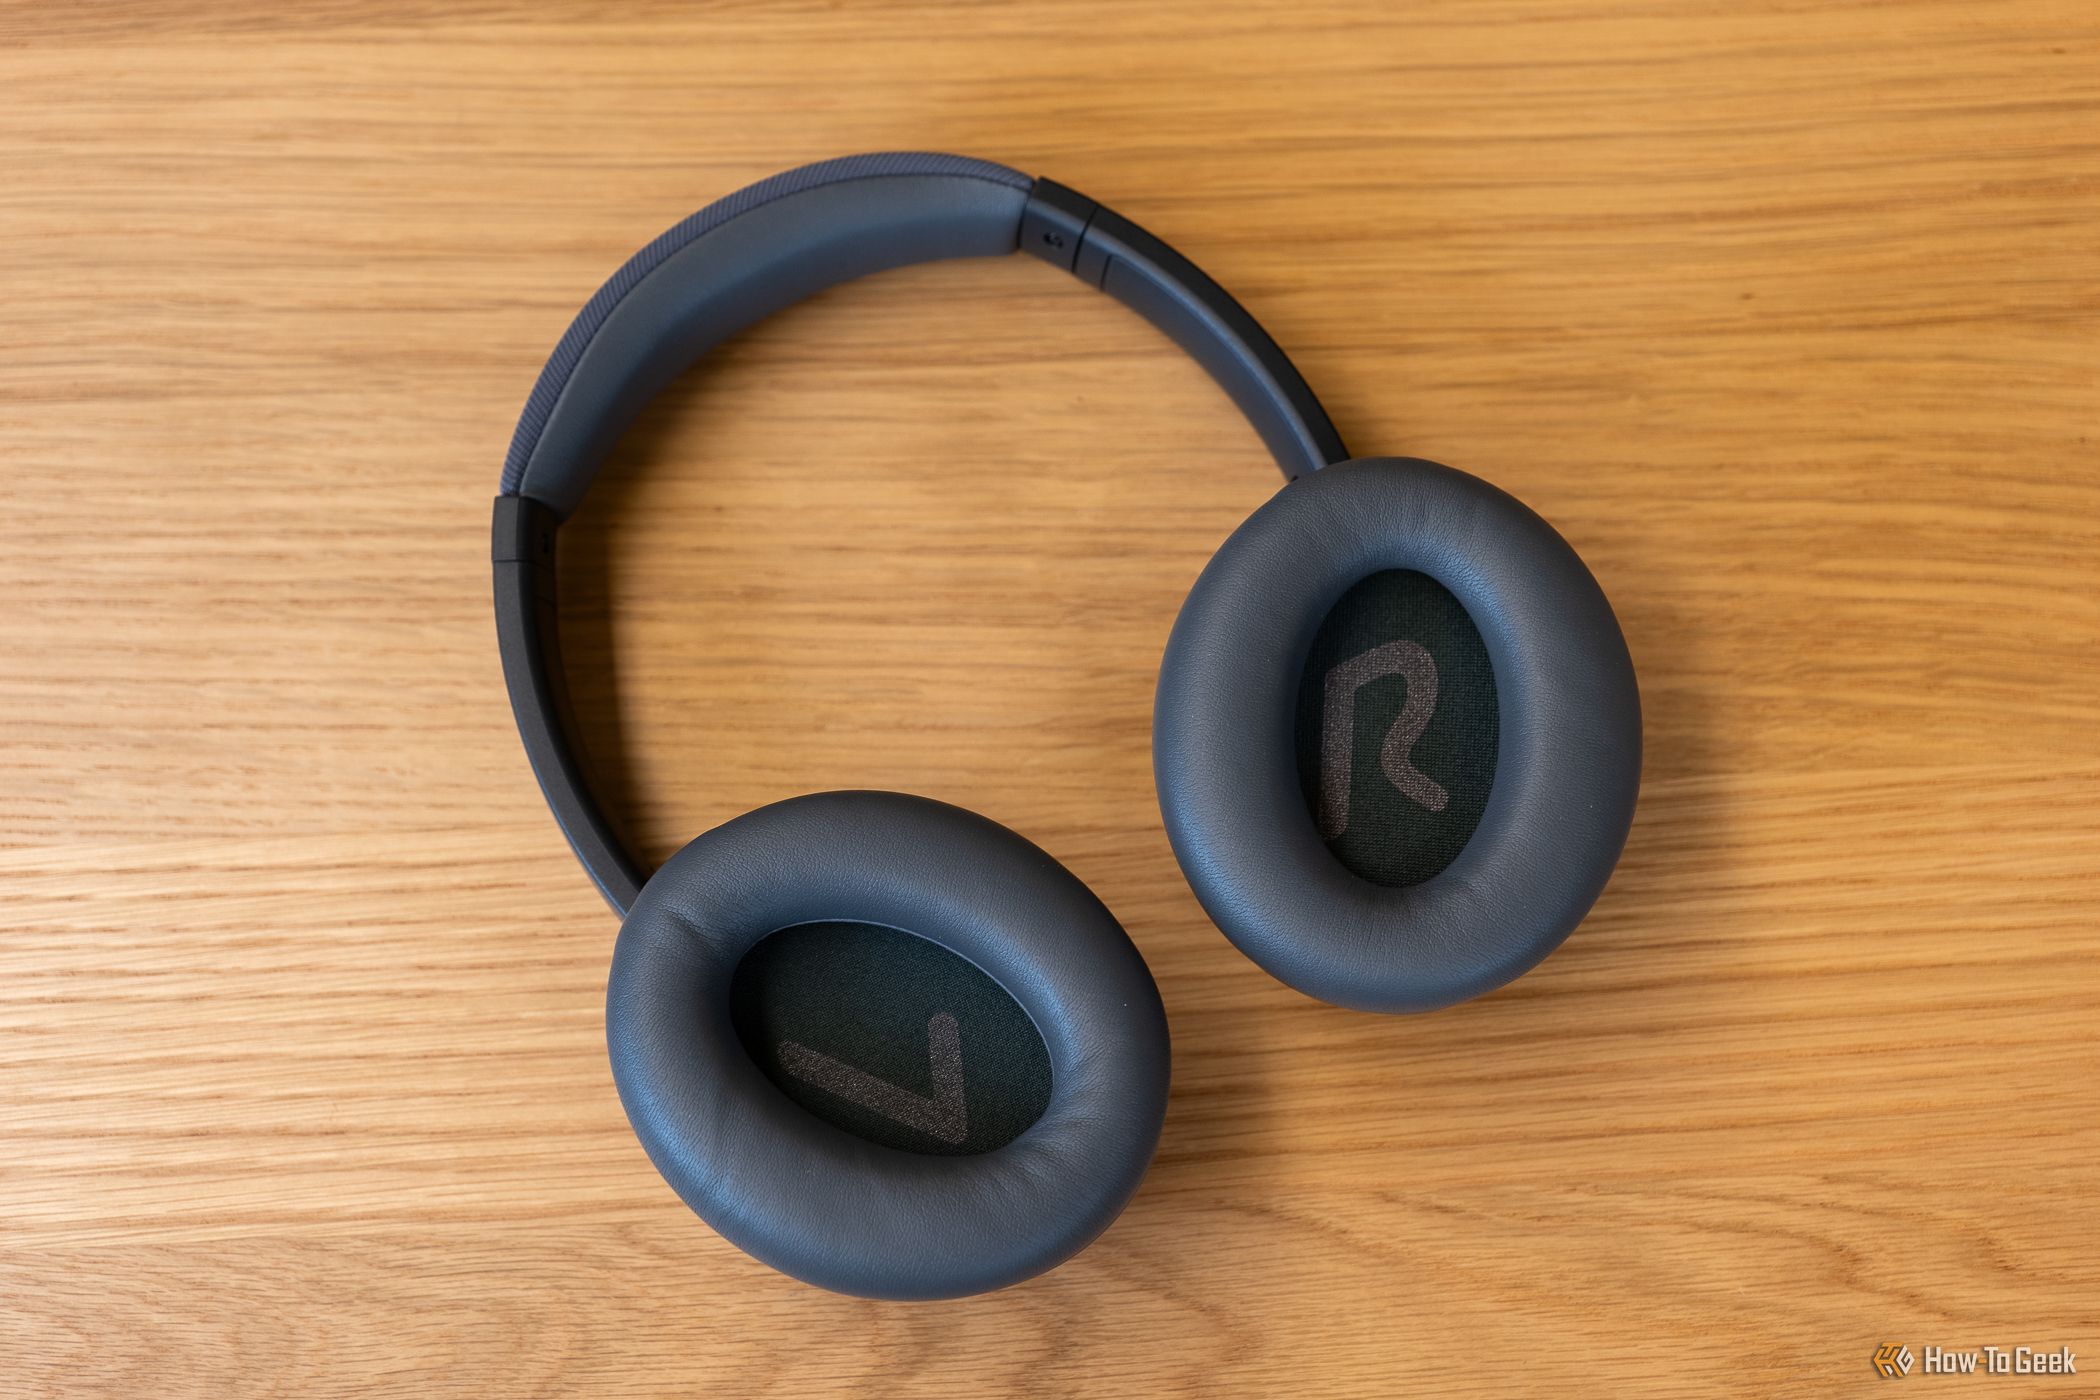 SoundPEATS Space Noise Cancelling Headphones - White